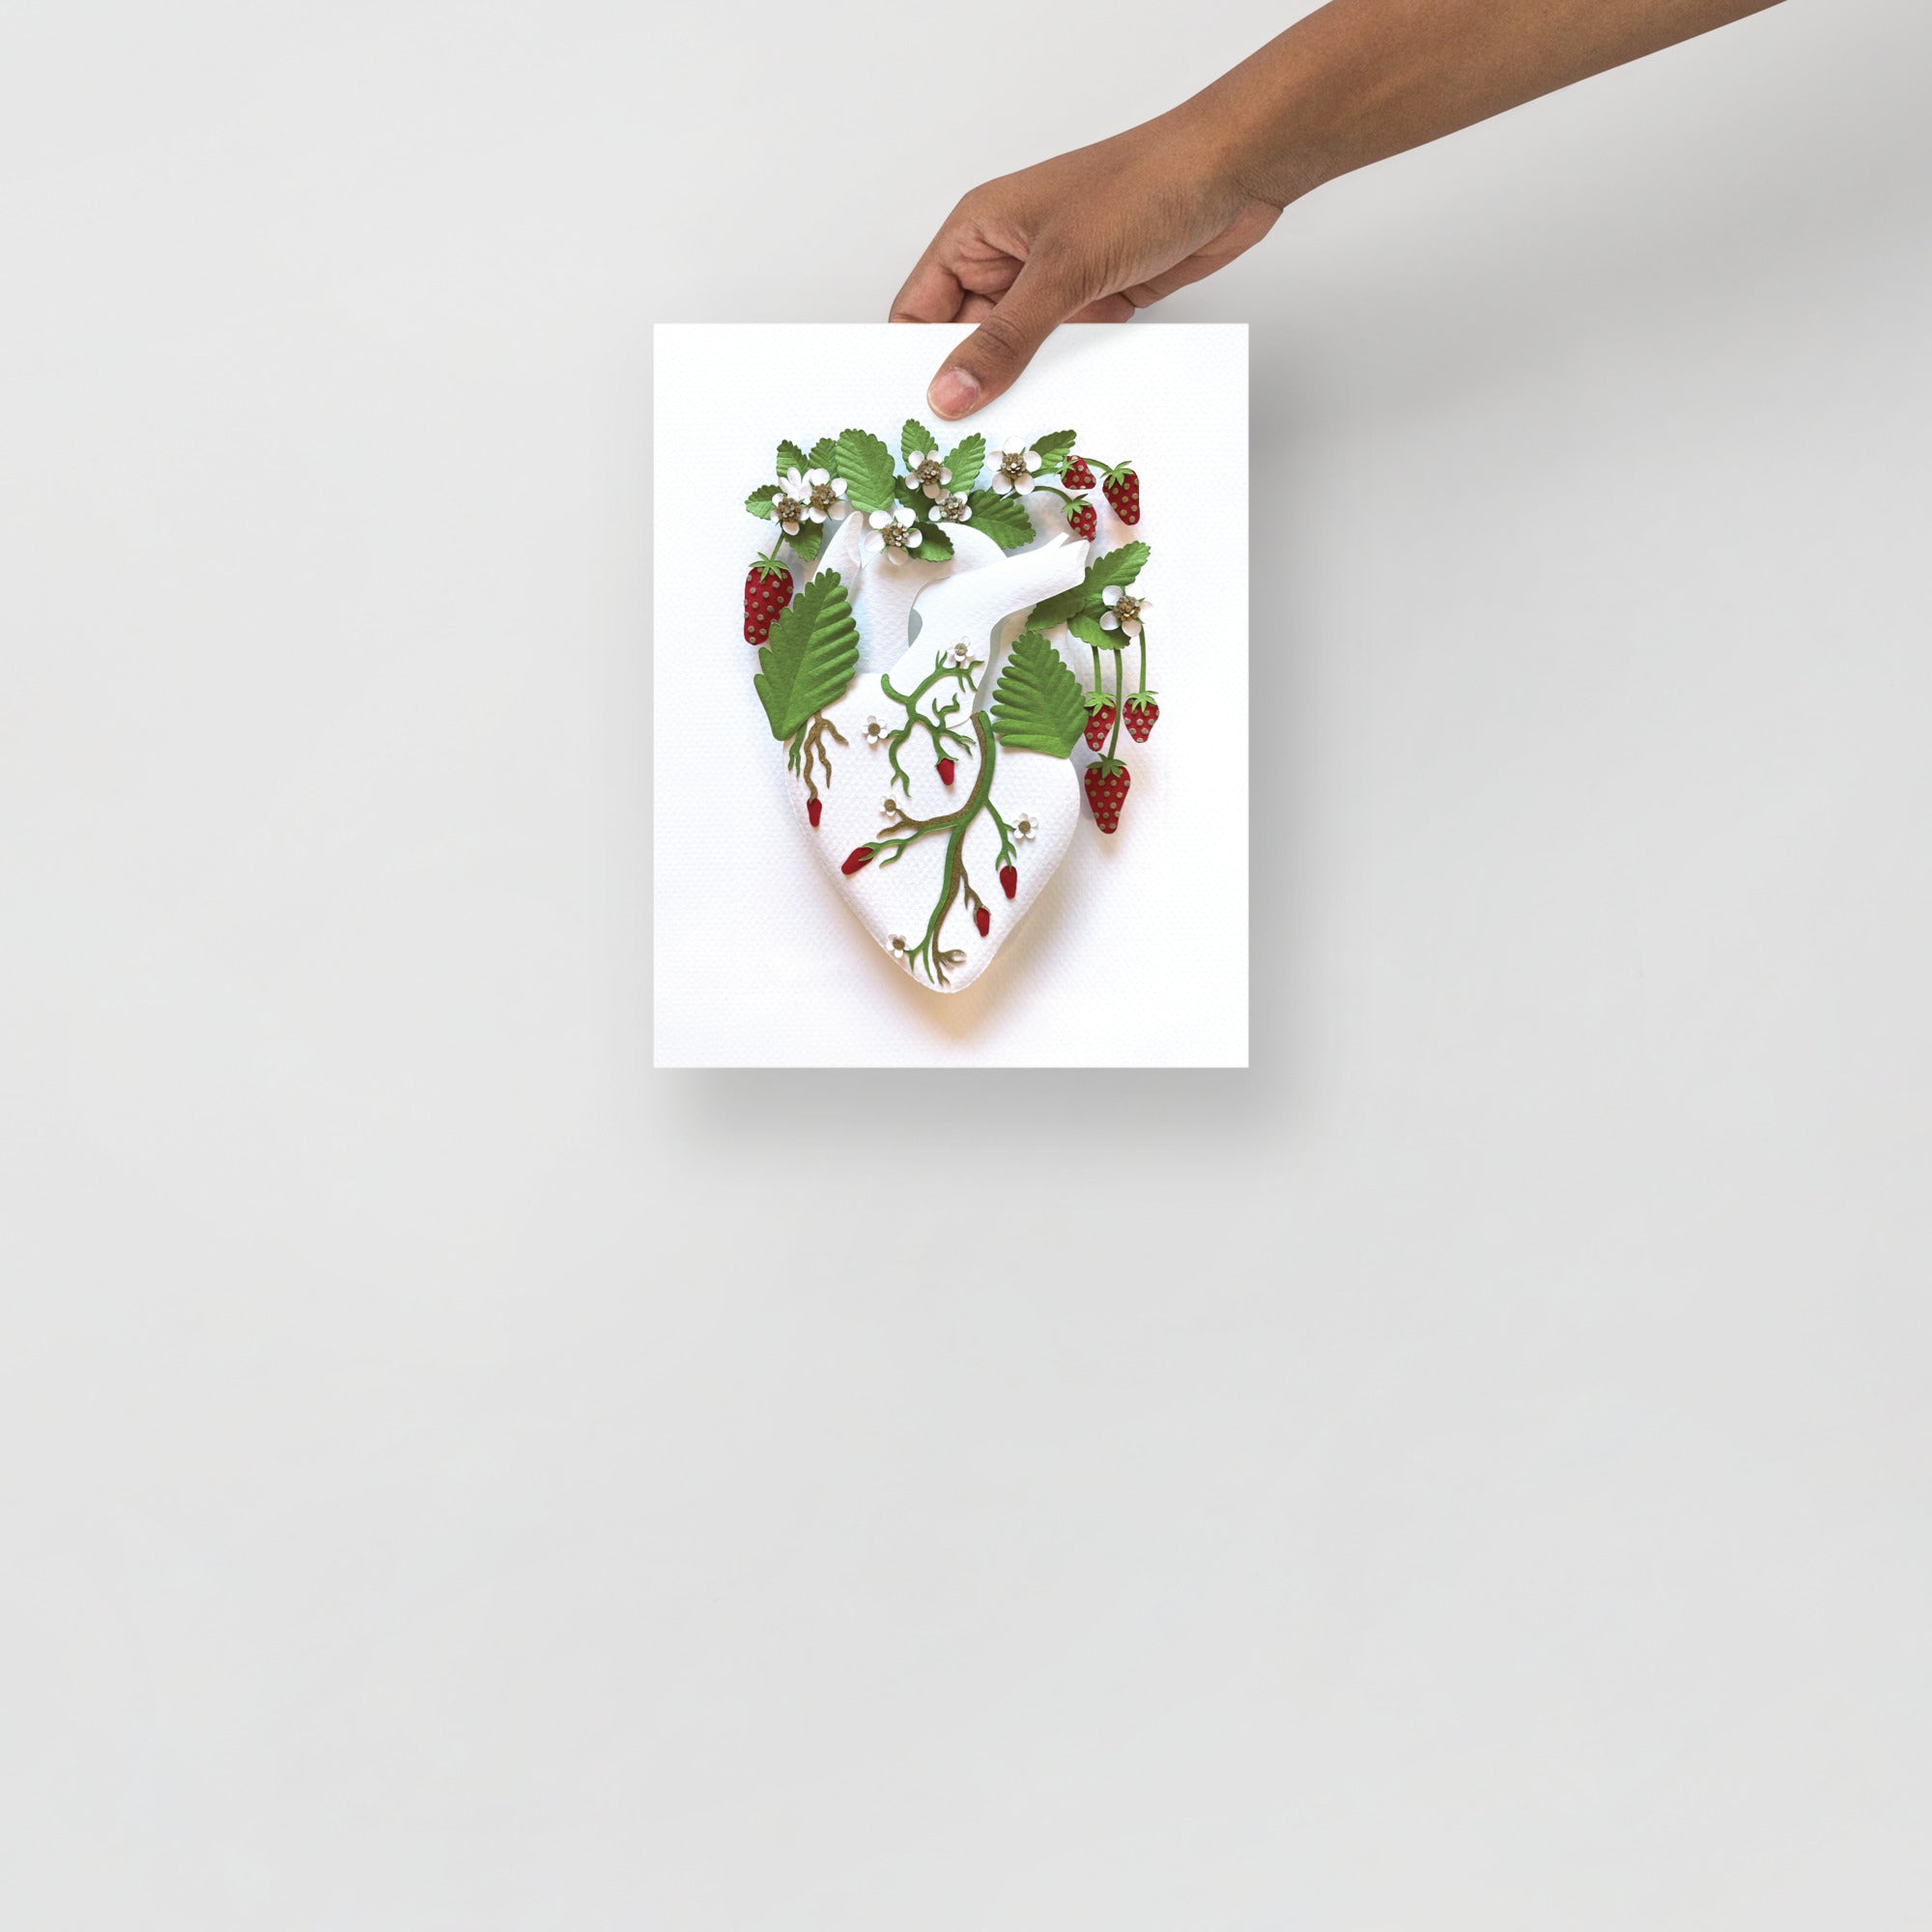 Healing Heart: Strawberries 8" x 10" print